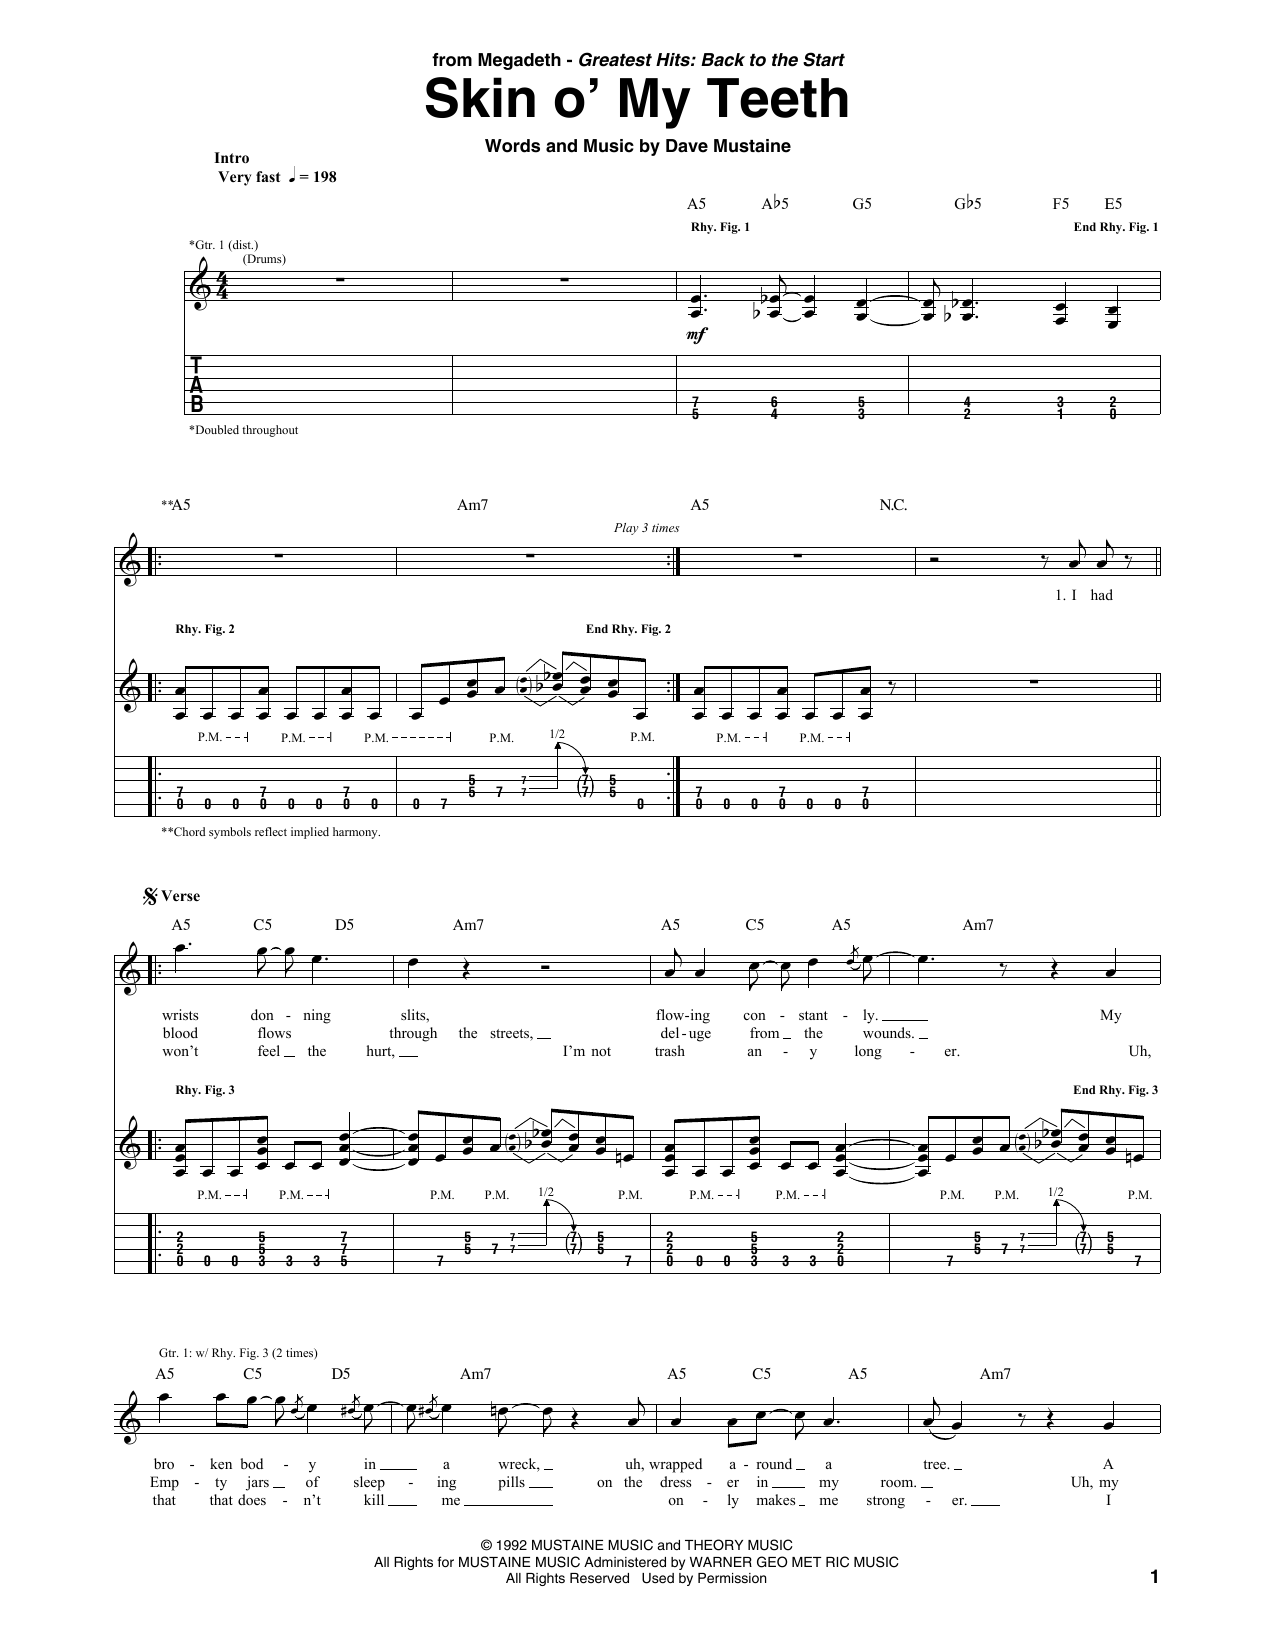 Megadeth Skin O' My Teeth Sheet Music Notes & Chords for Guitar Tab - Download or Print PDF